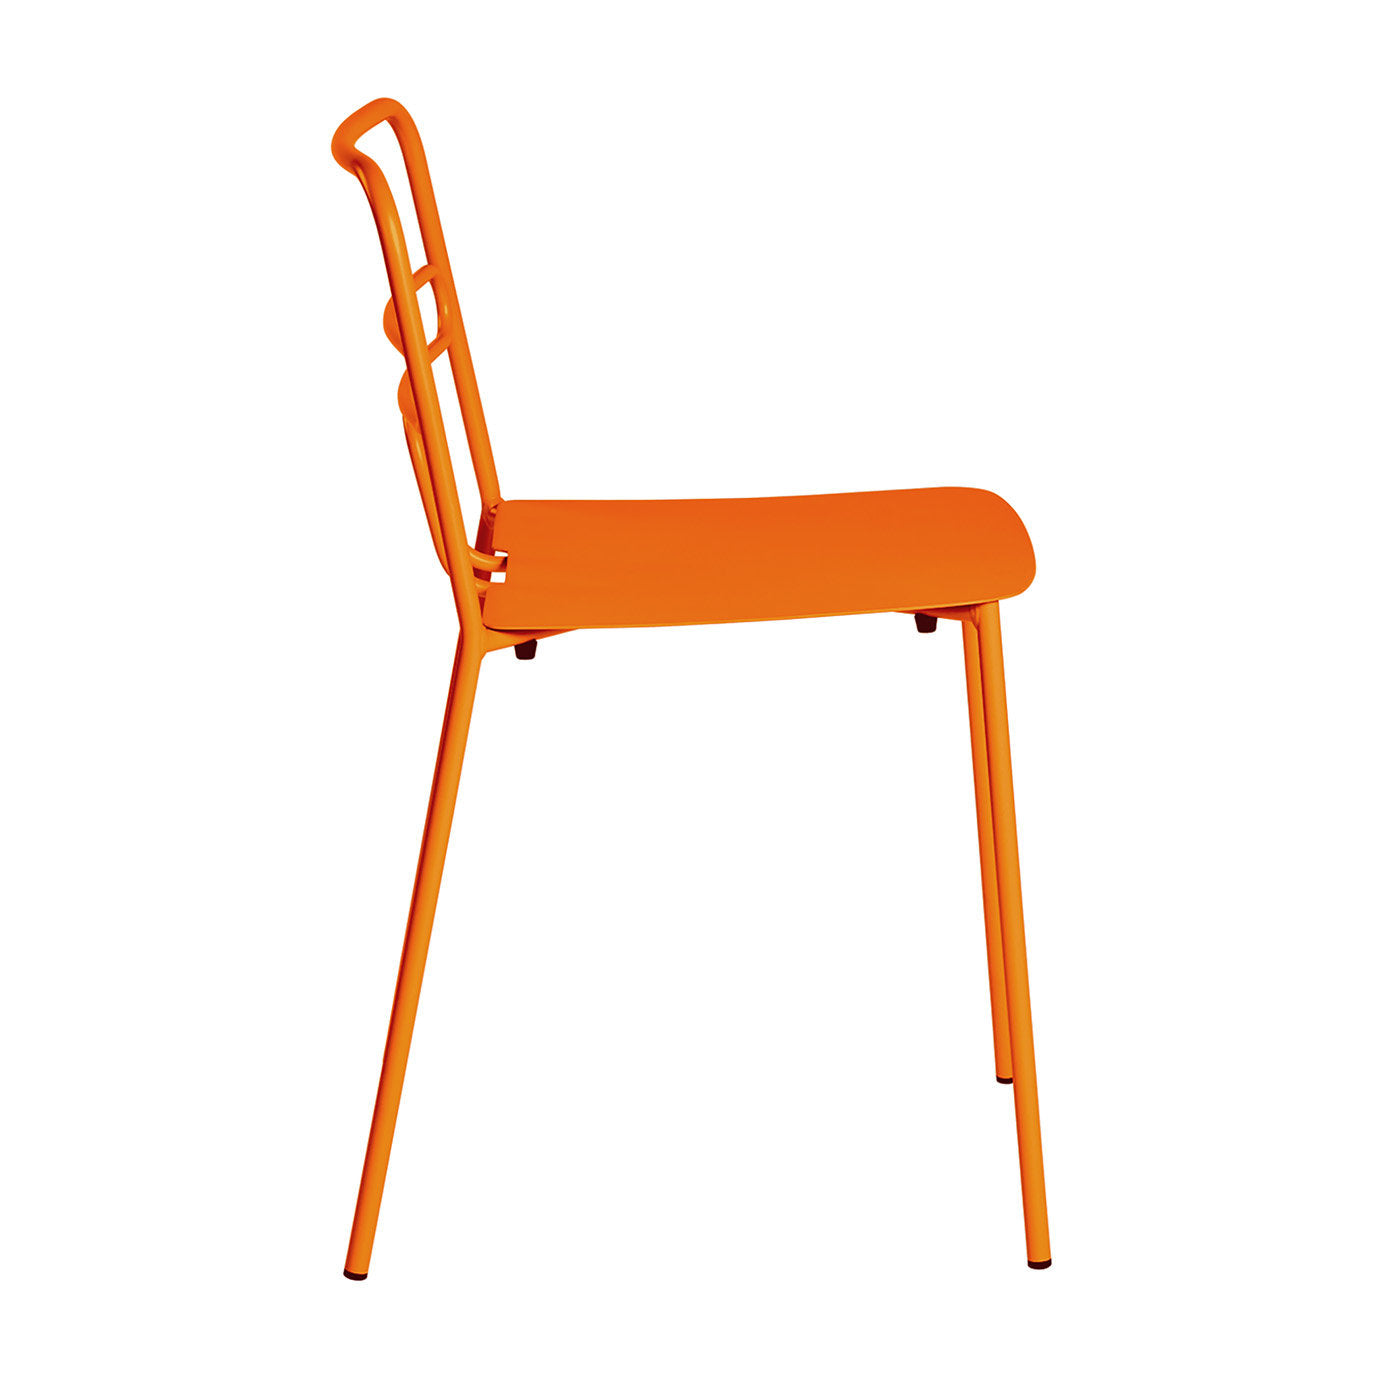 Dida Orange Chair - Alternative view 1